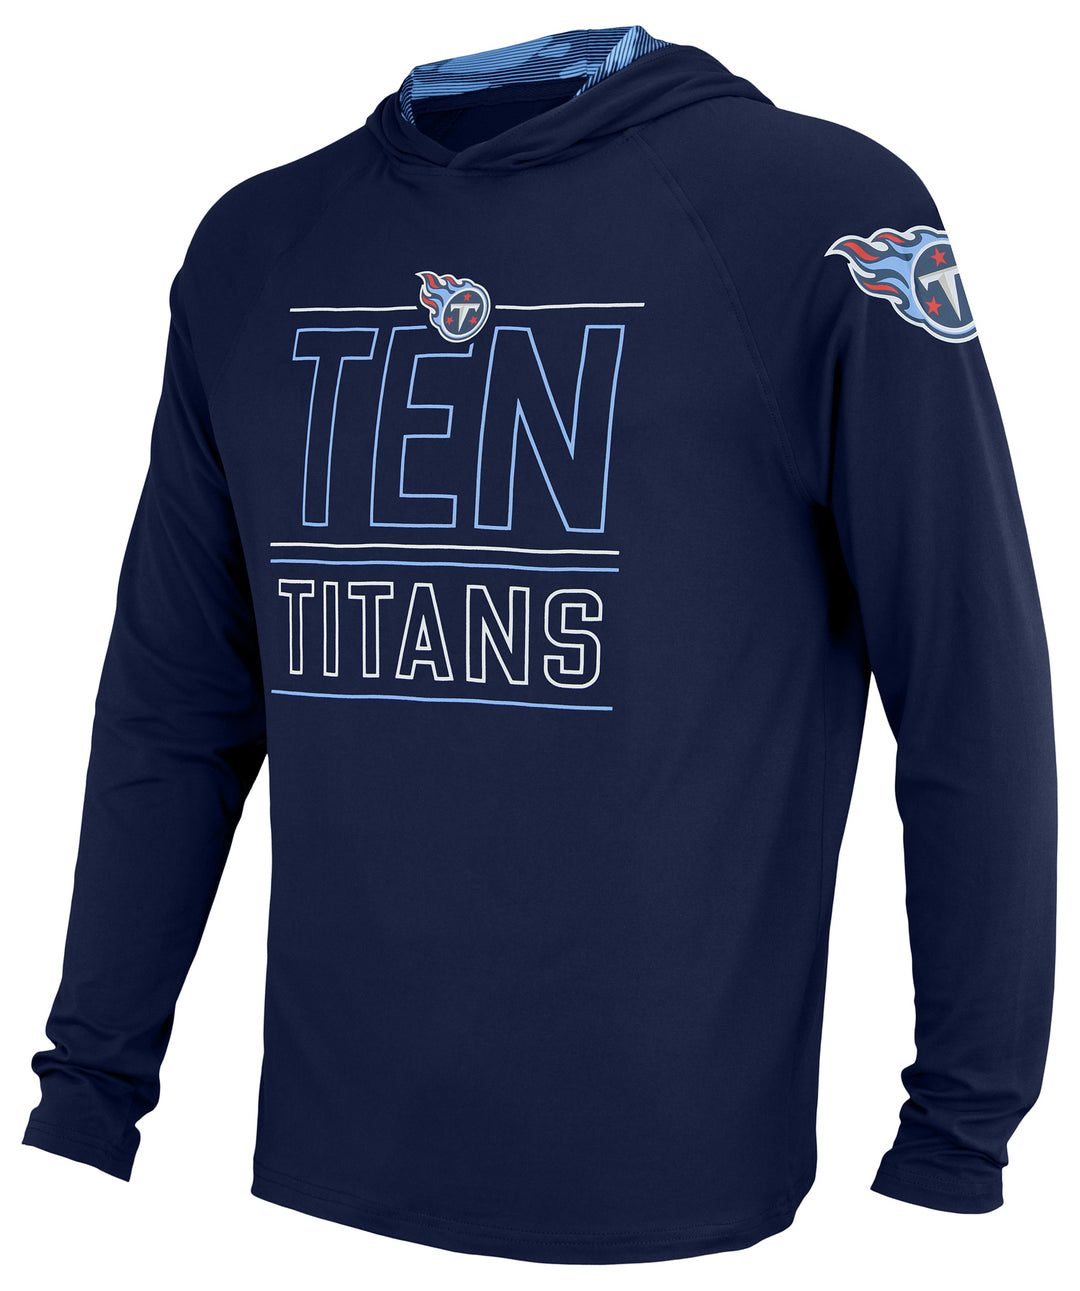 Zubaz NFL Men's Tennessee Titans Team Color Active Hoodie With Camo Accents